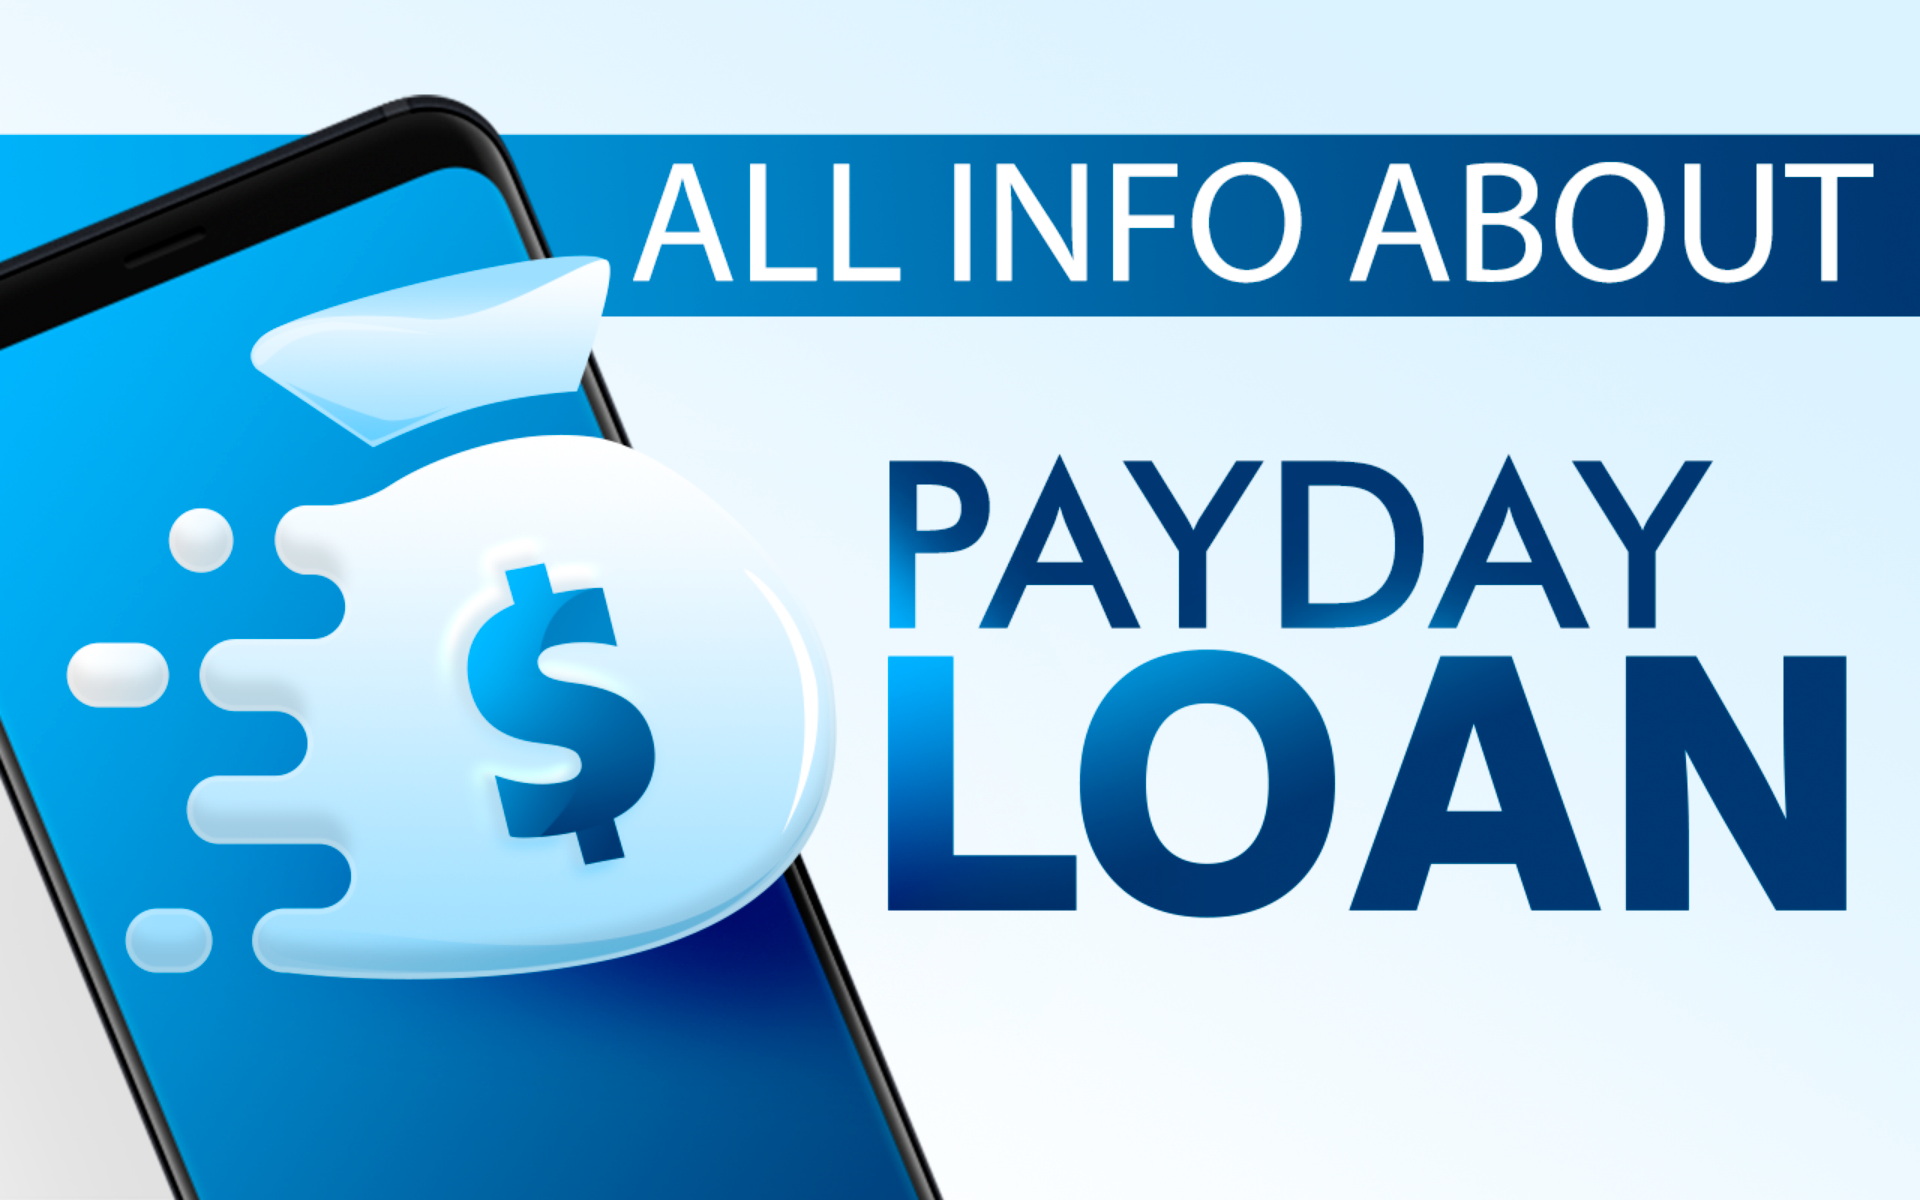 Payday Loans California